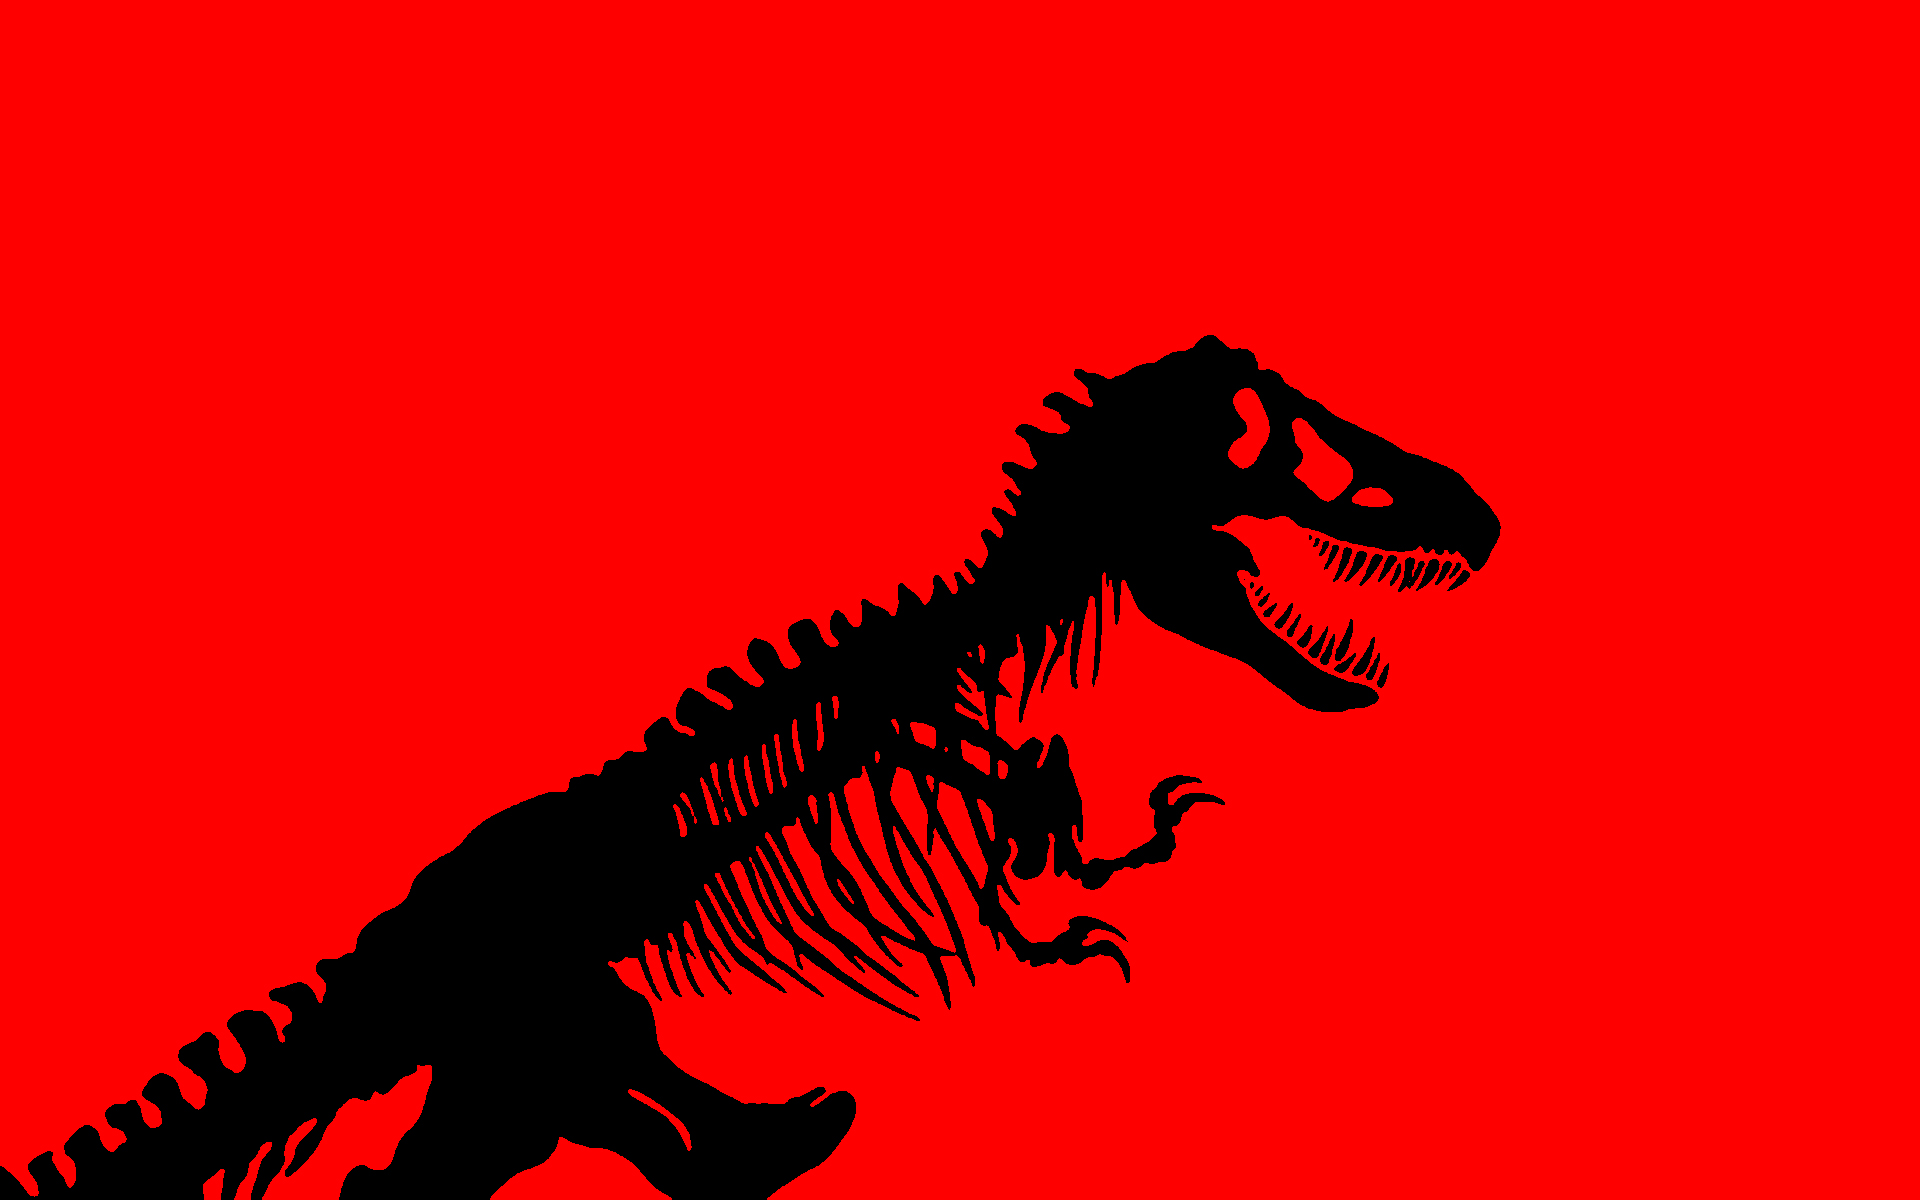 Wallpaper Skeleton Dinosaur Desktop Jurassicpark